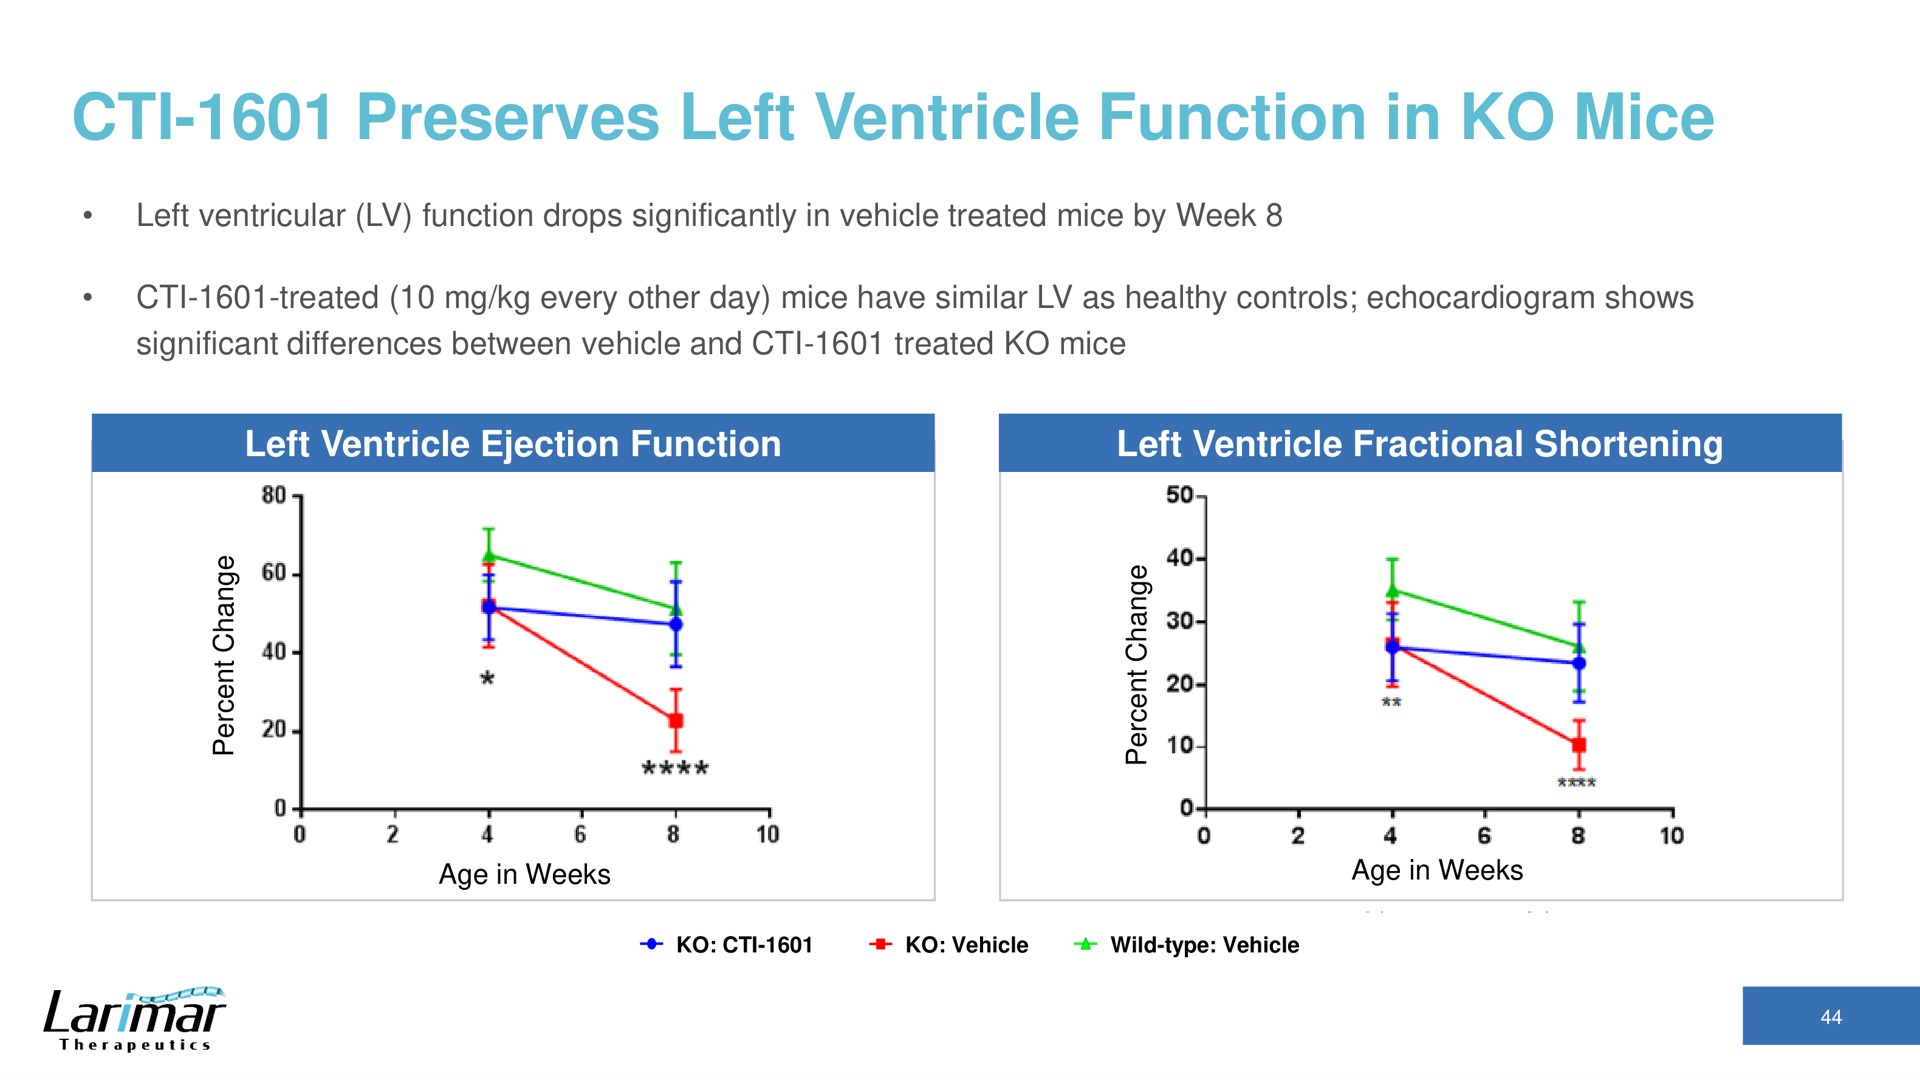 preserves left ventricle function in mice | Larimar Therapeutics